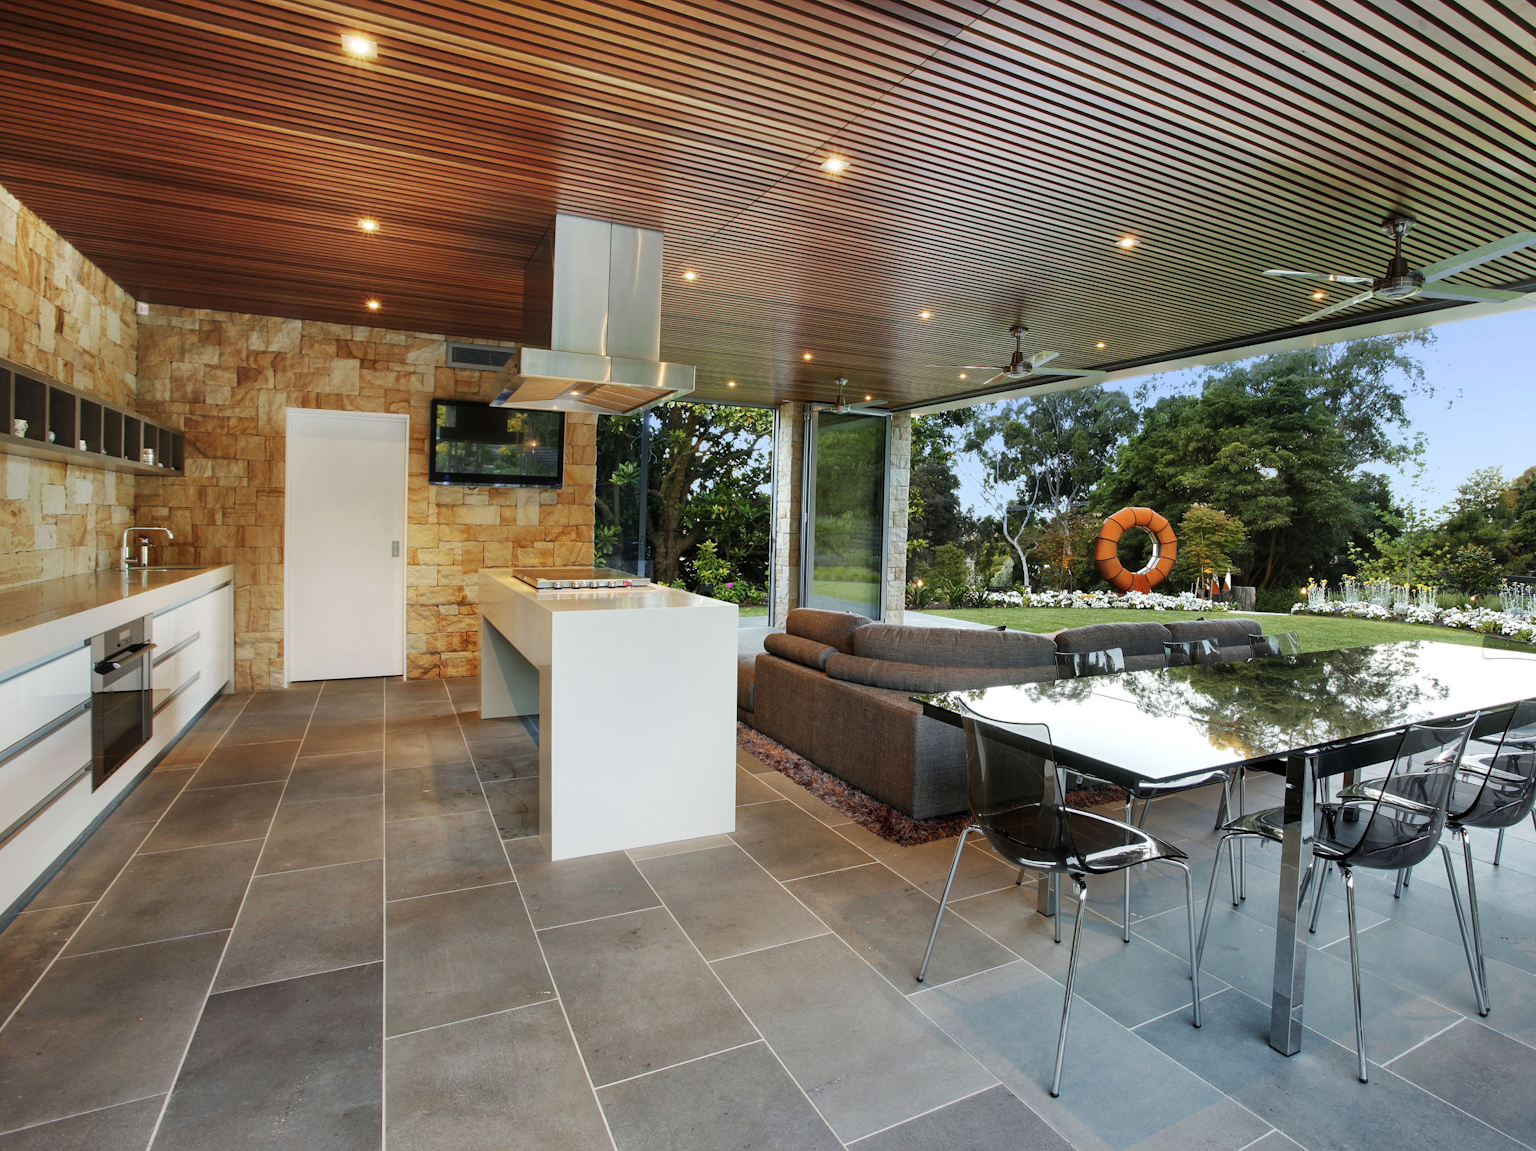 Outdoor kitchen area with large format bluestone paving and Killcare sandstone random ashlar walling